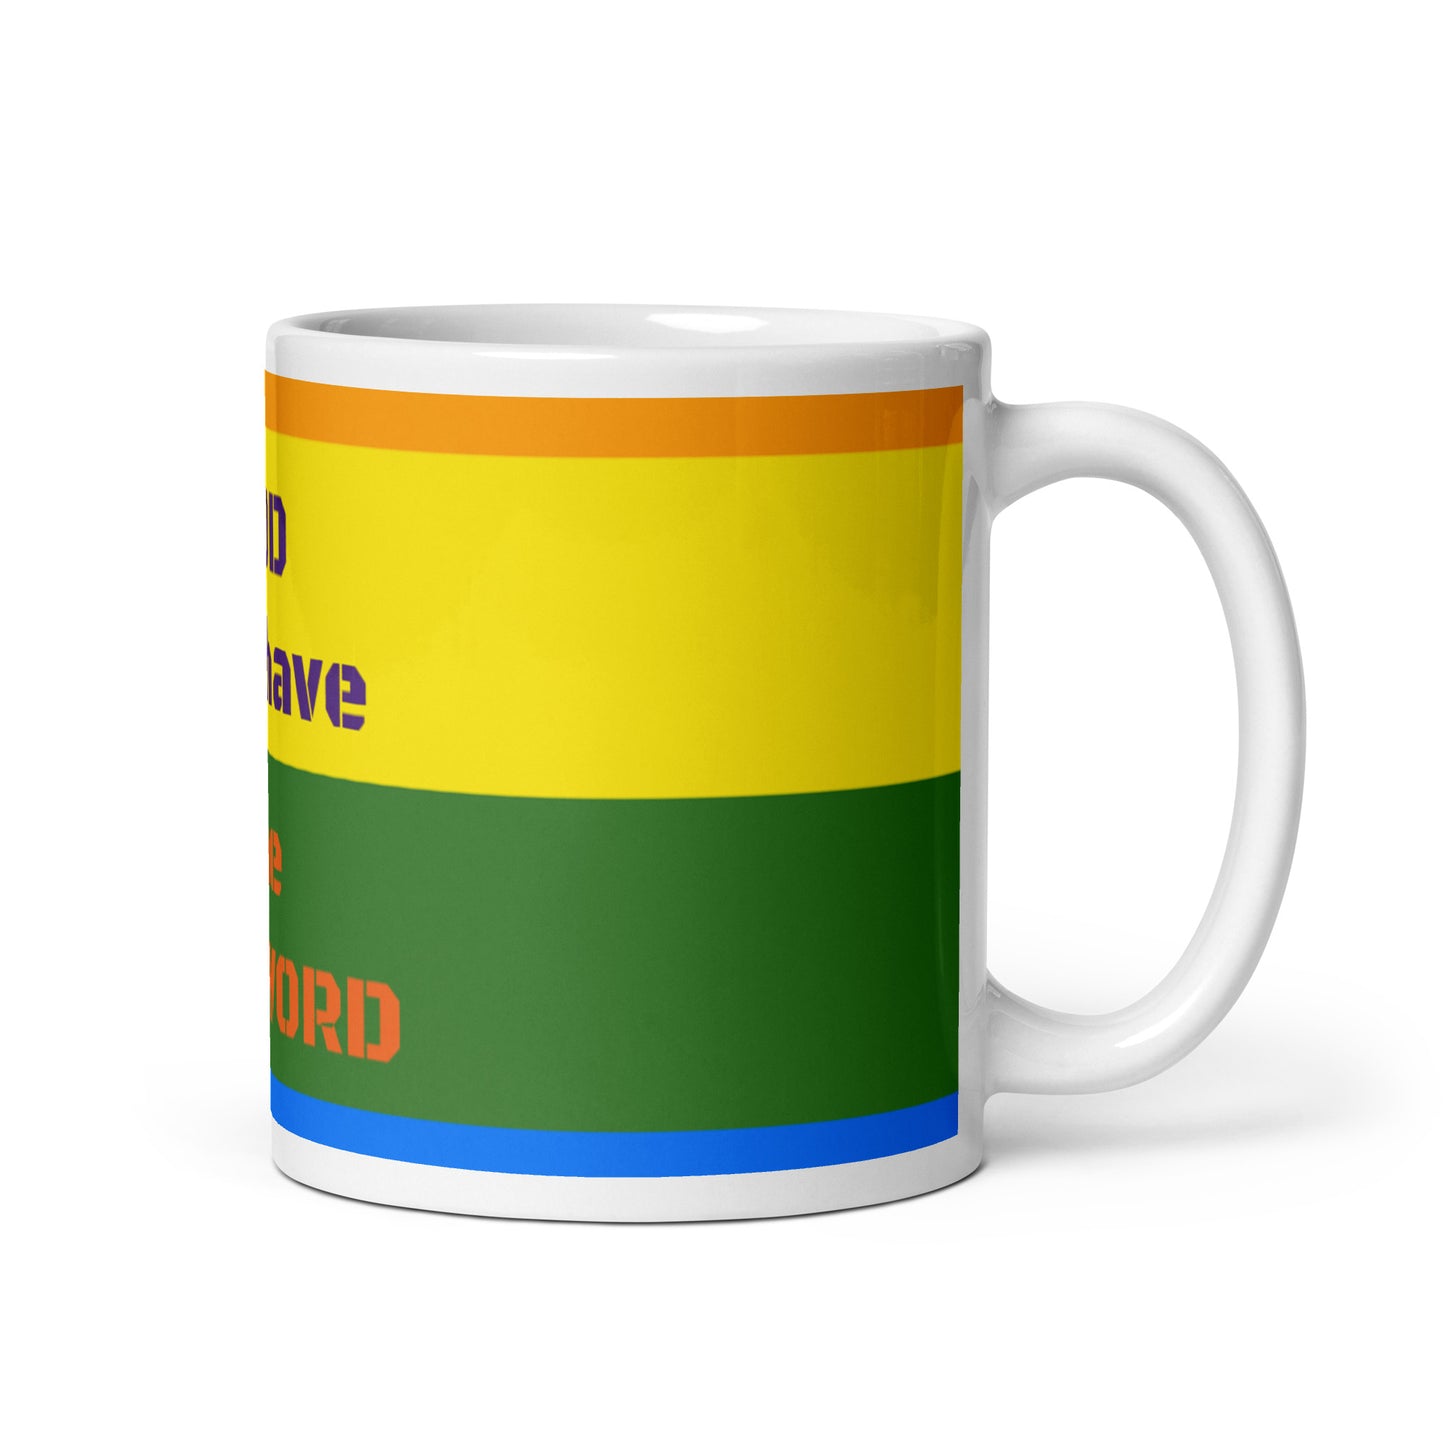 Rainbow White Glossy Mug - God will have the last word